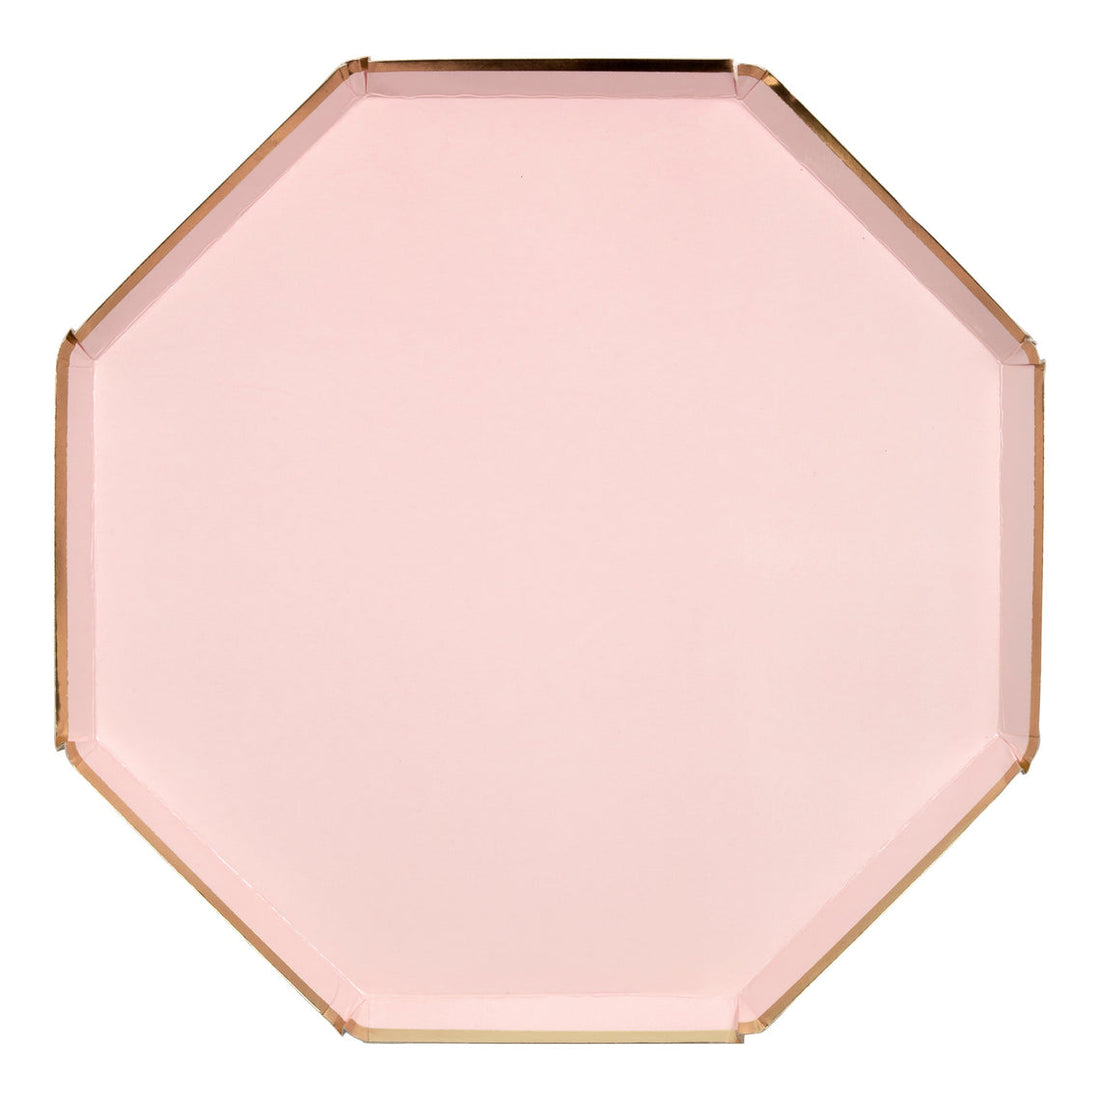 A Meri Meri Dusky Pink Plates with gold foil border.